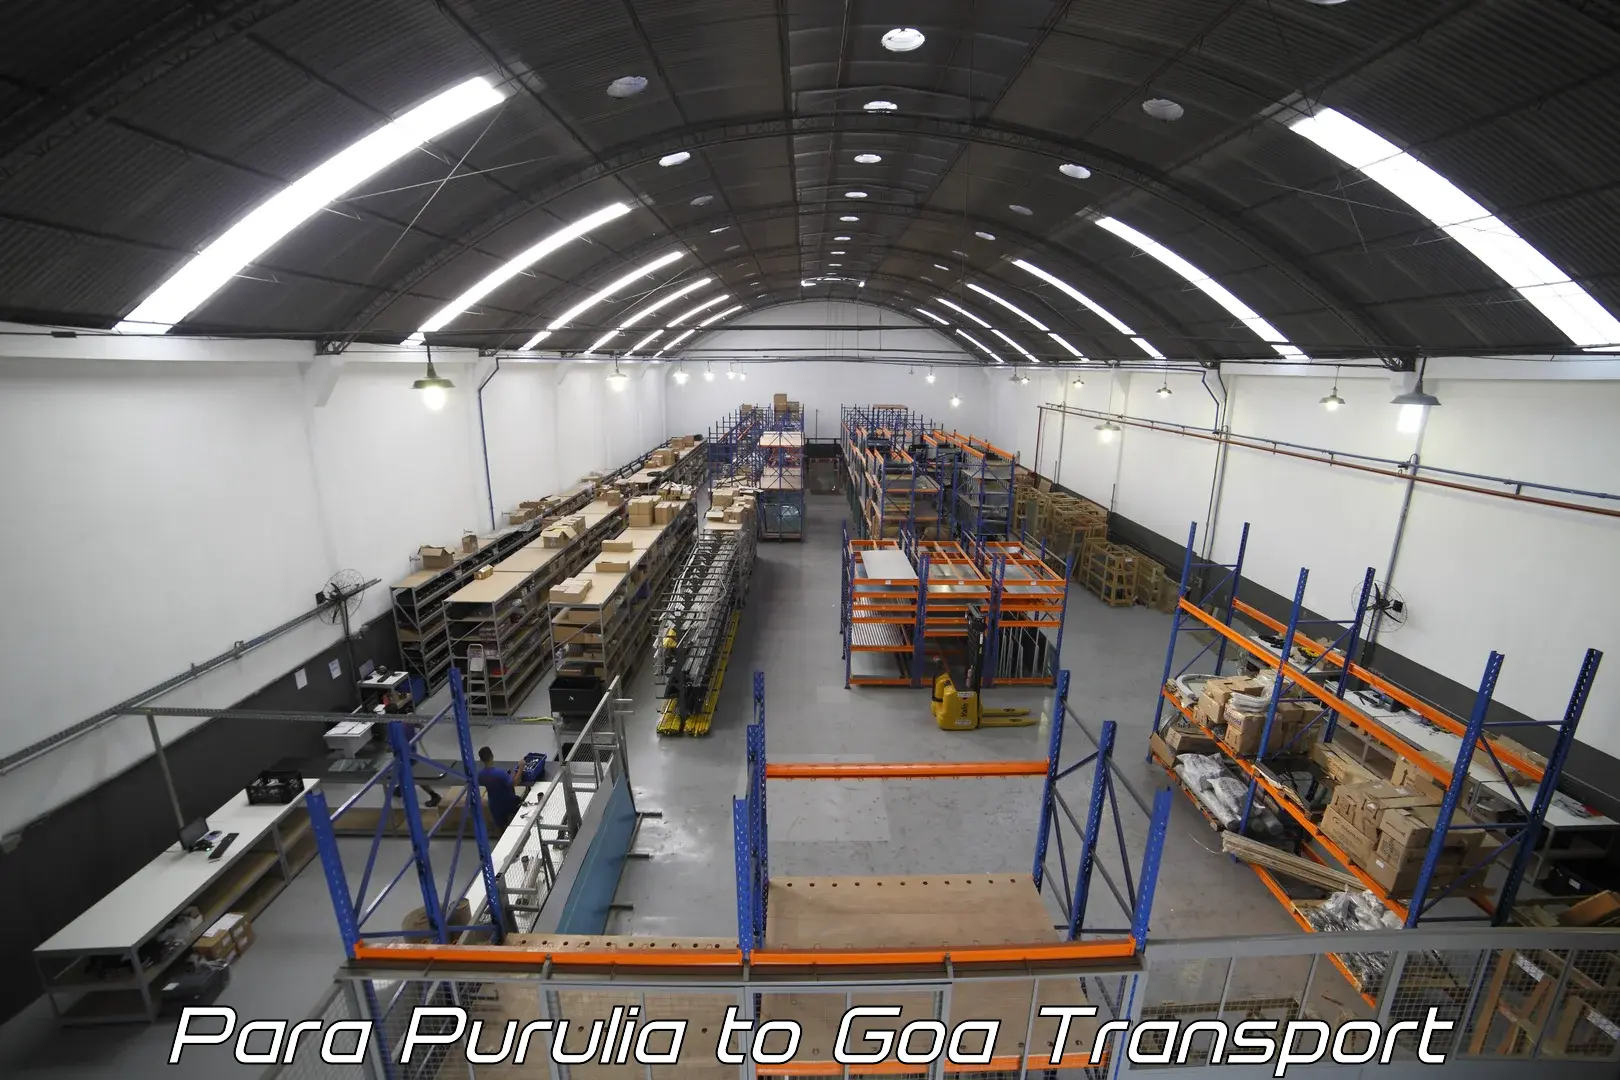 Goods delivery service Para Purulia to Vasco da Gama